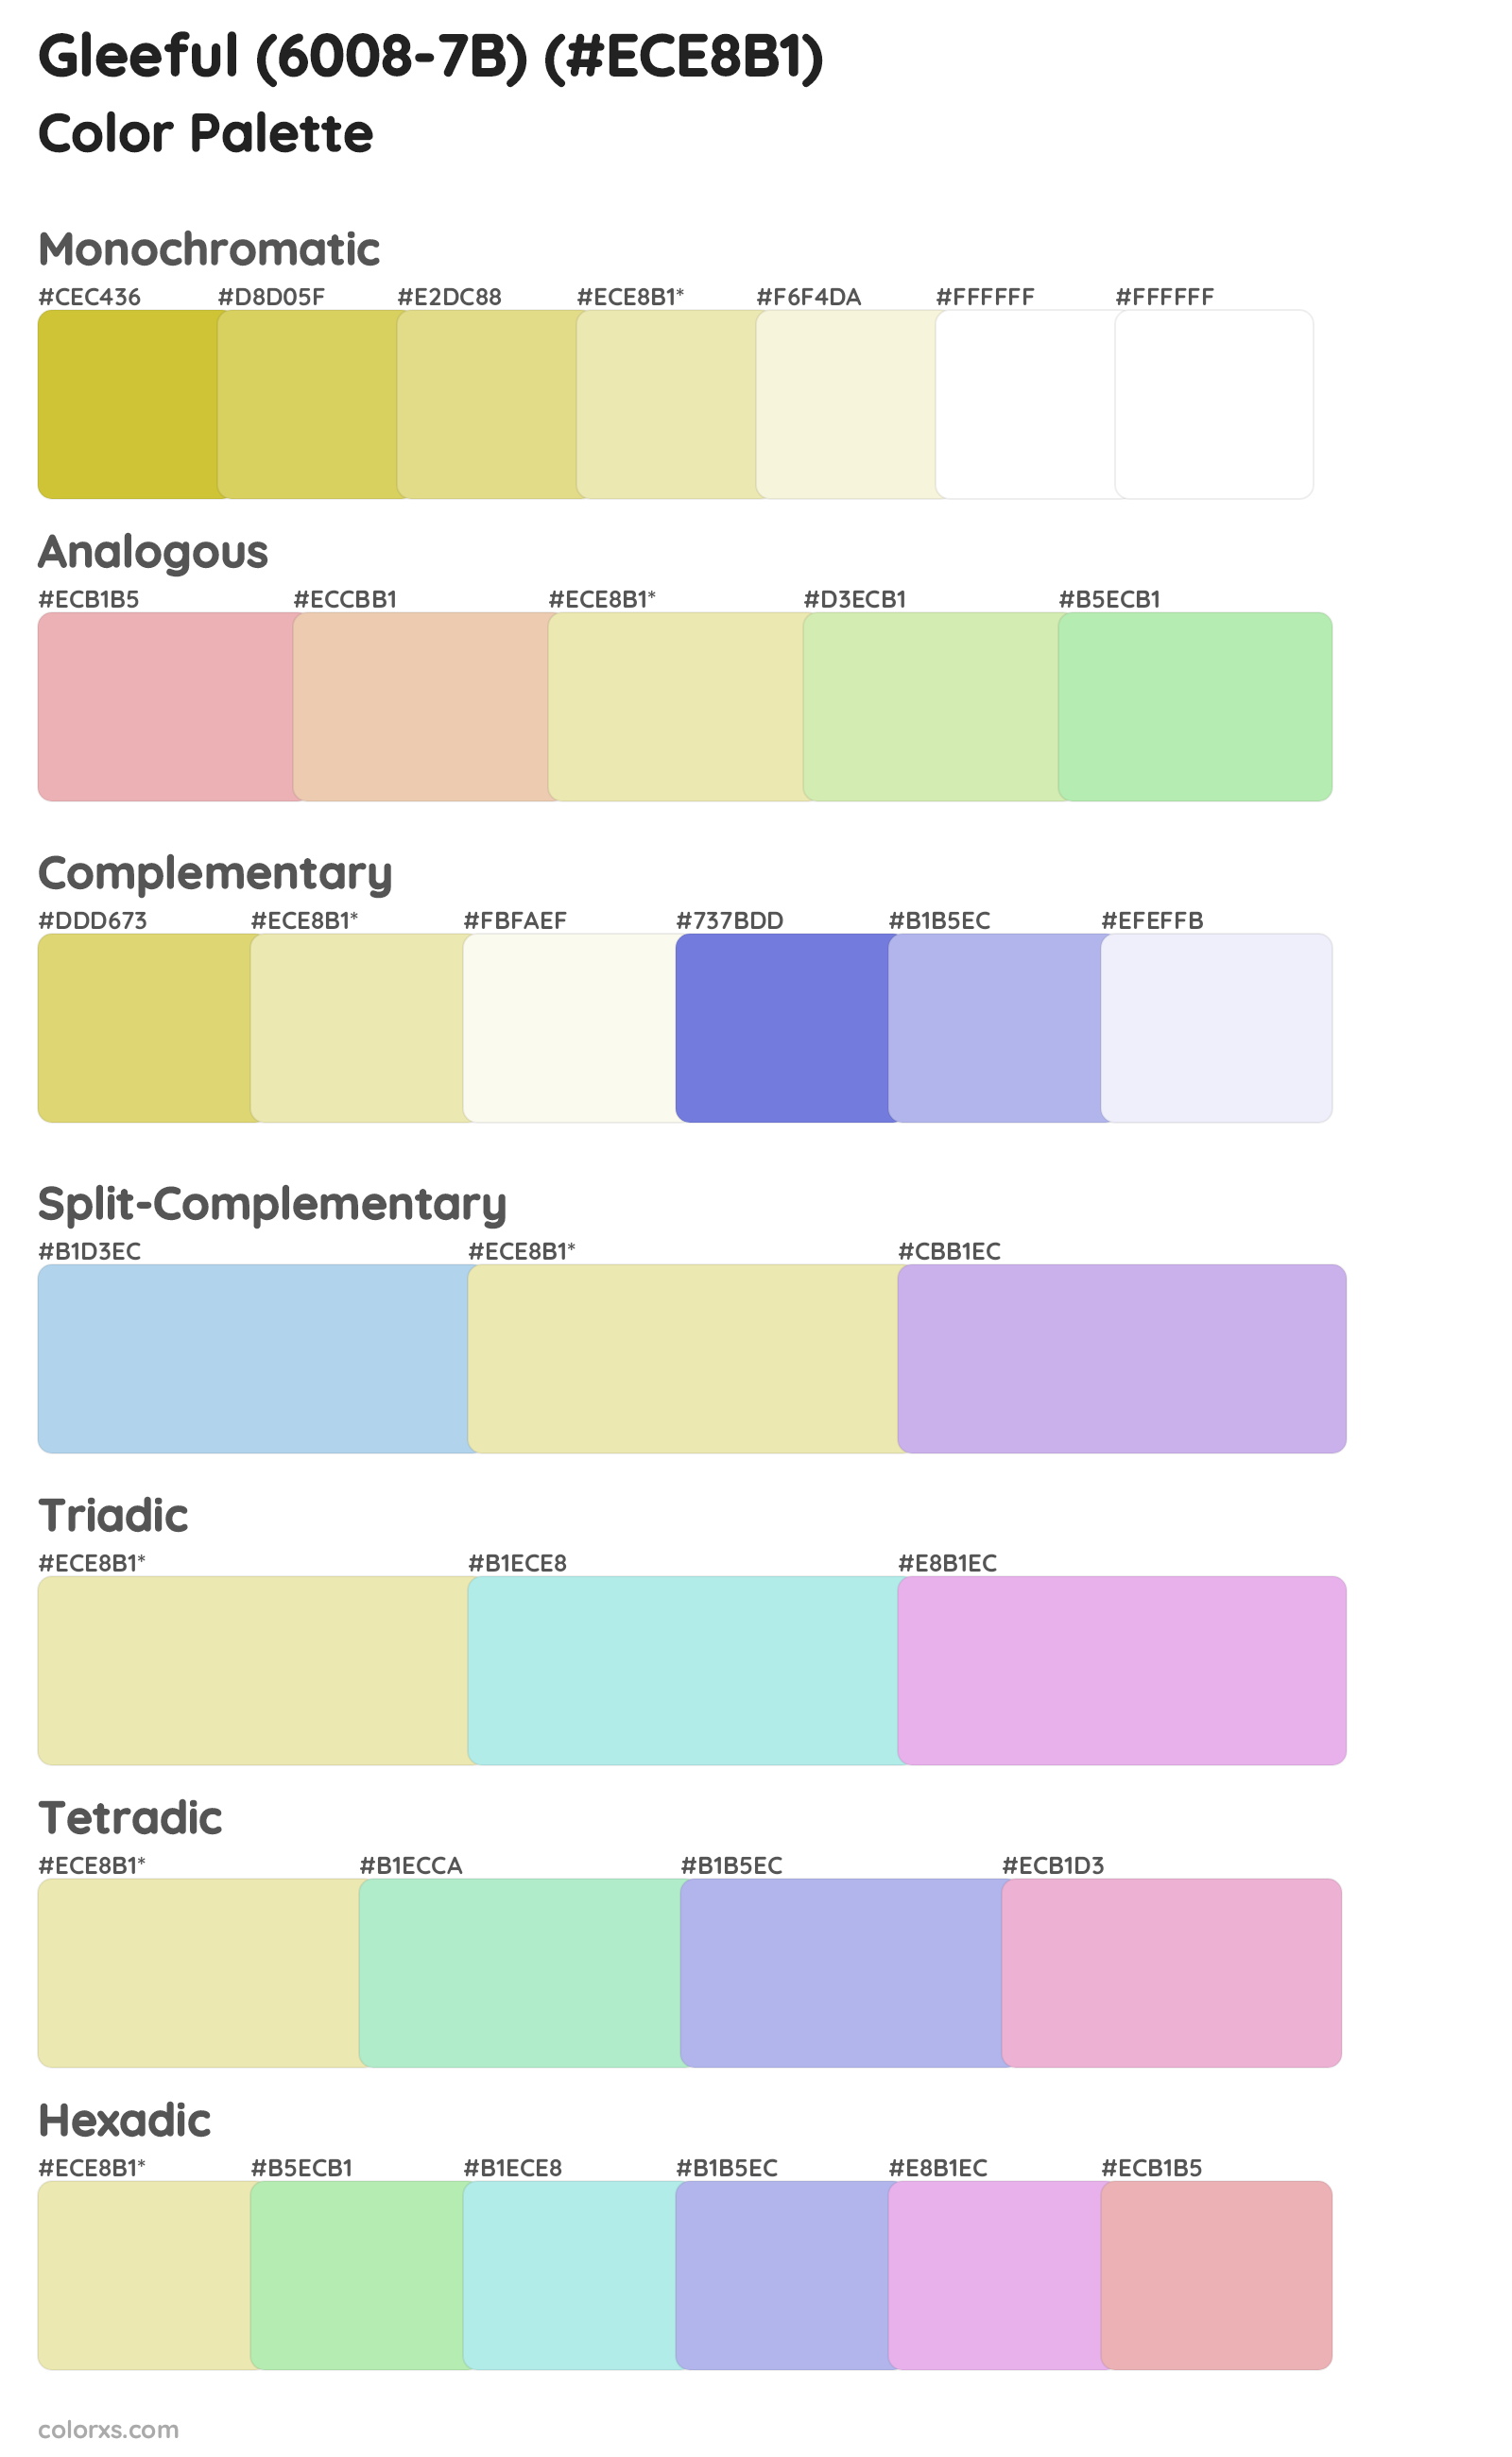 Gleeful (6008-7B) Color Scheme Palettes